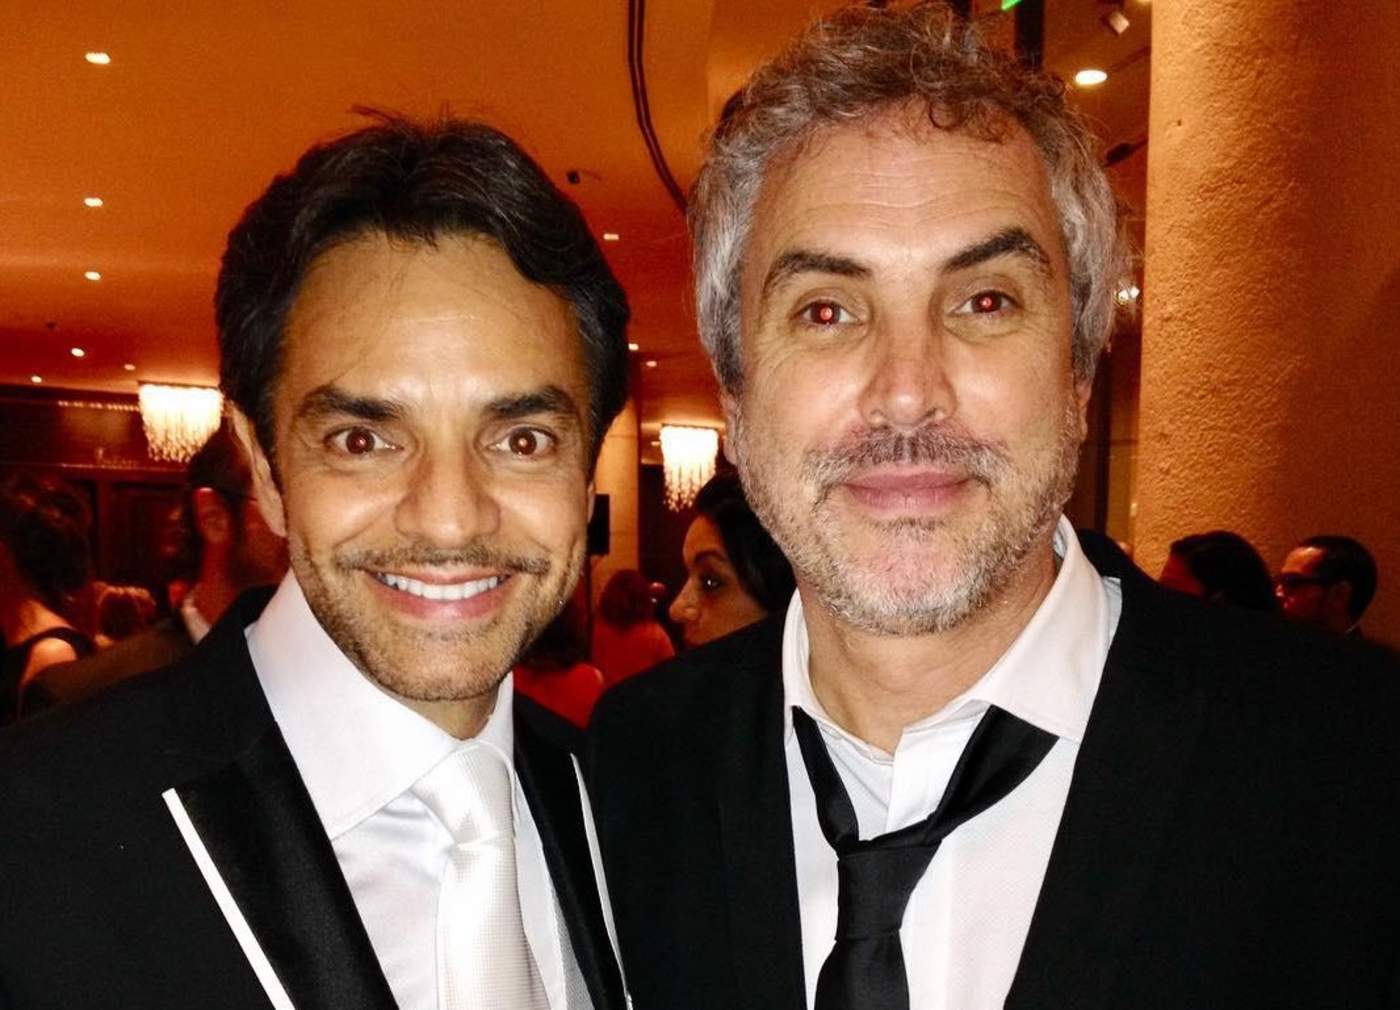 A Derbez le complace observar el ascenso de Alfonso Cuarón como director. (ESPECIAL)